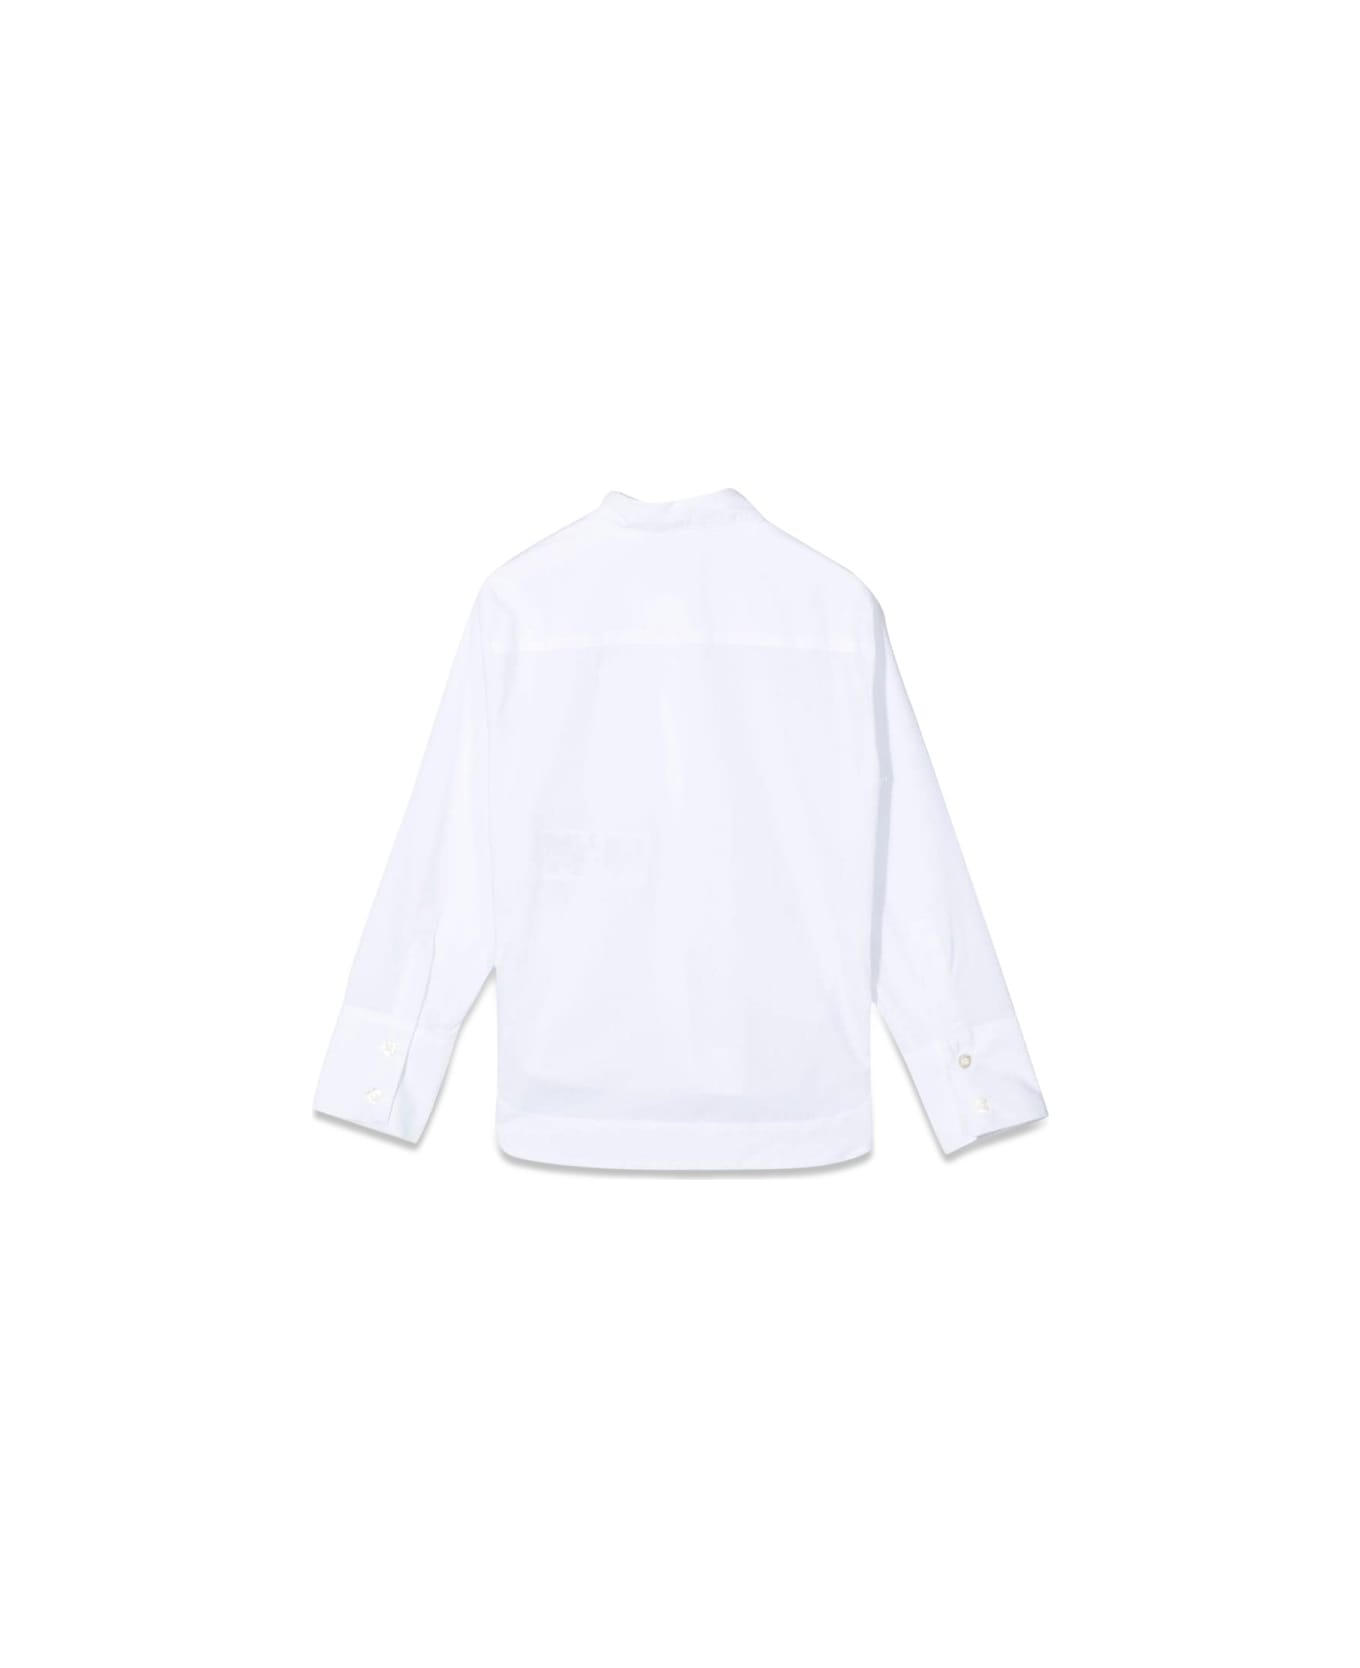 Emporio Armani Shirt M/l - WHITE